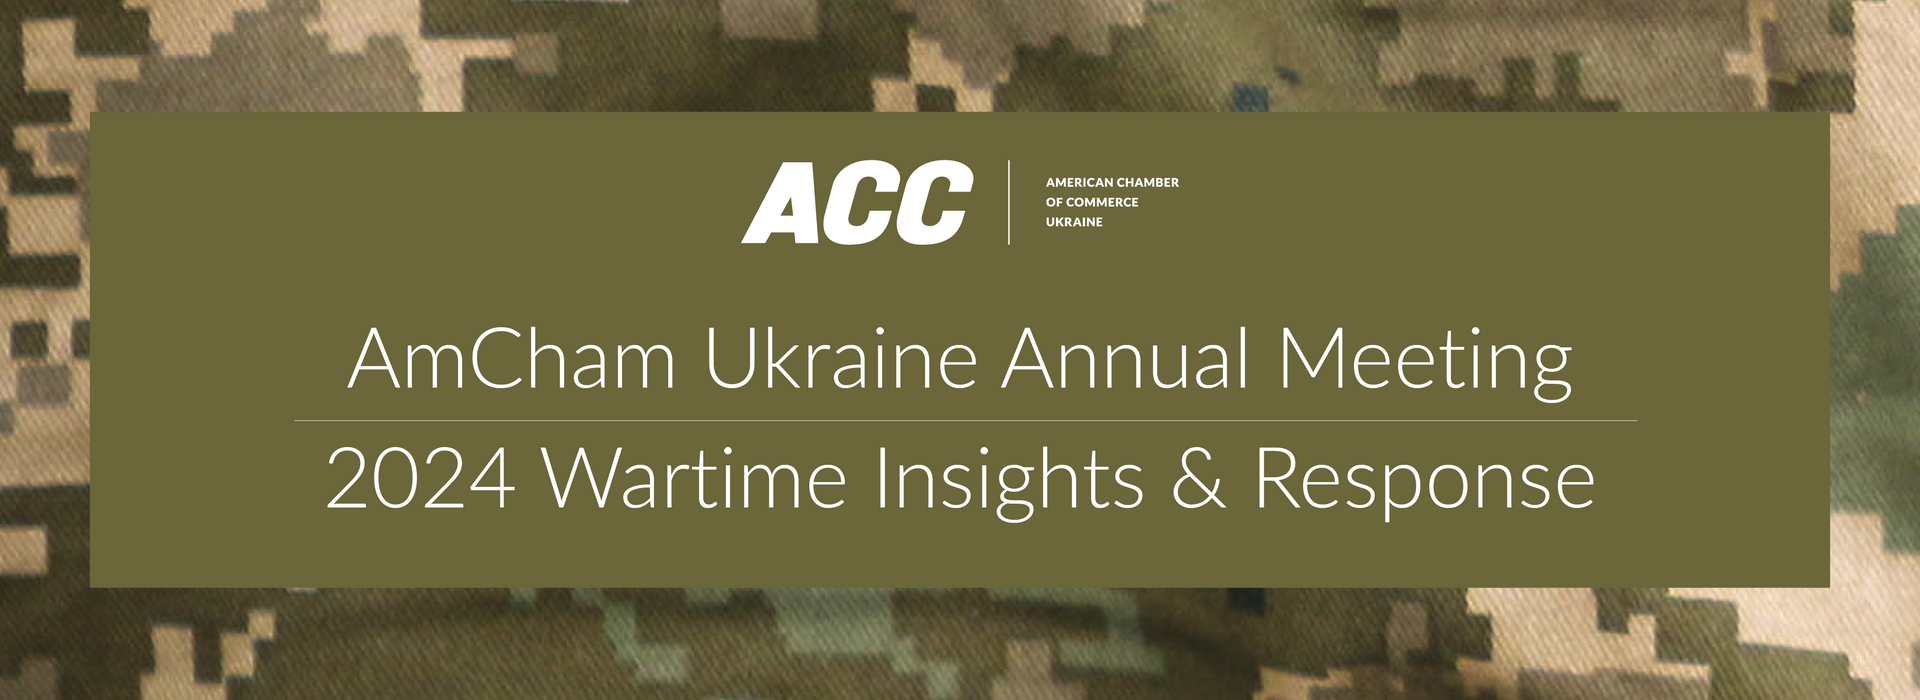 AmCham Ukraine Annual Meeting – 2024 Wartime Insights & Response